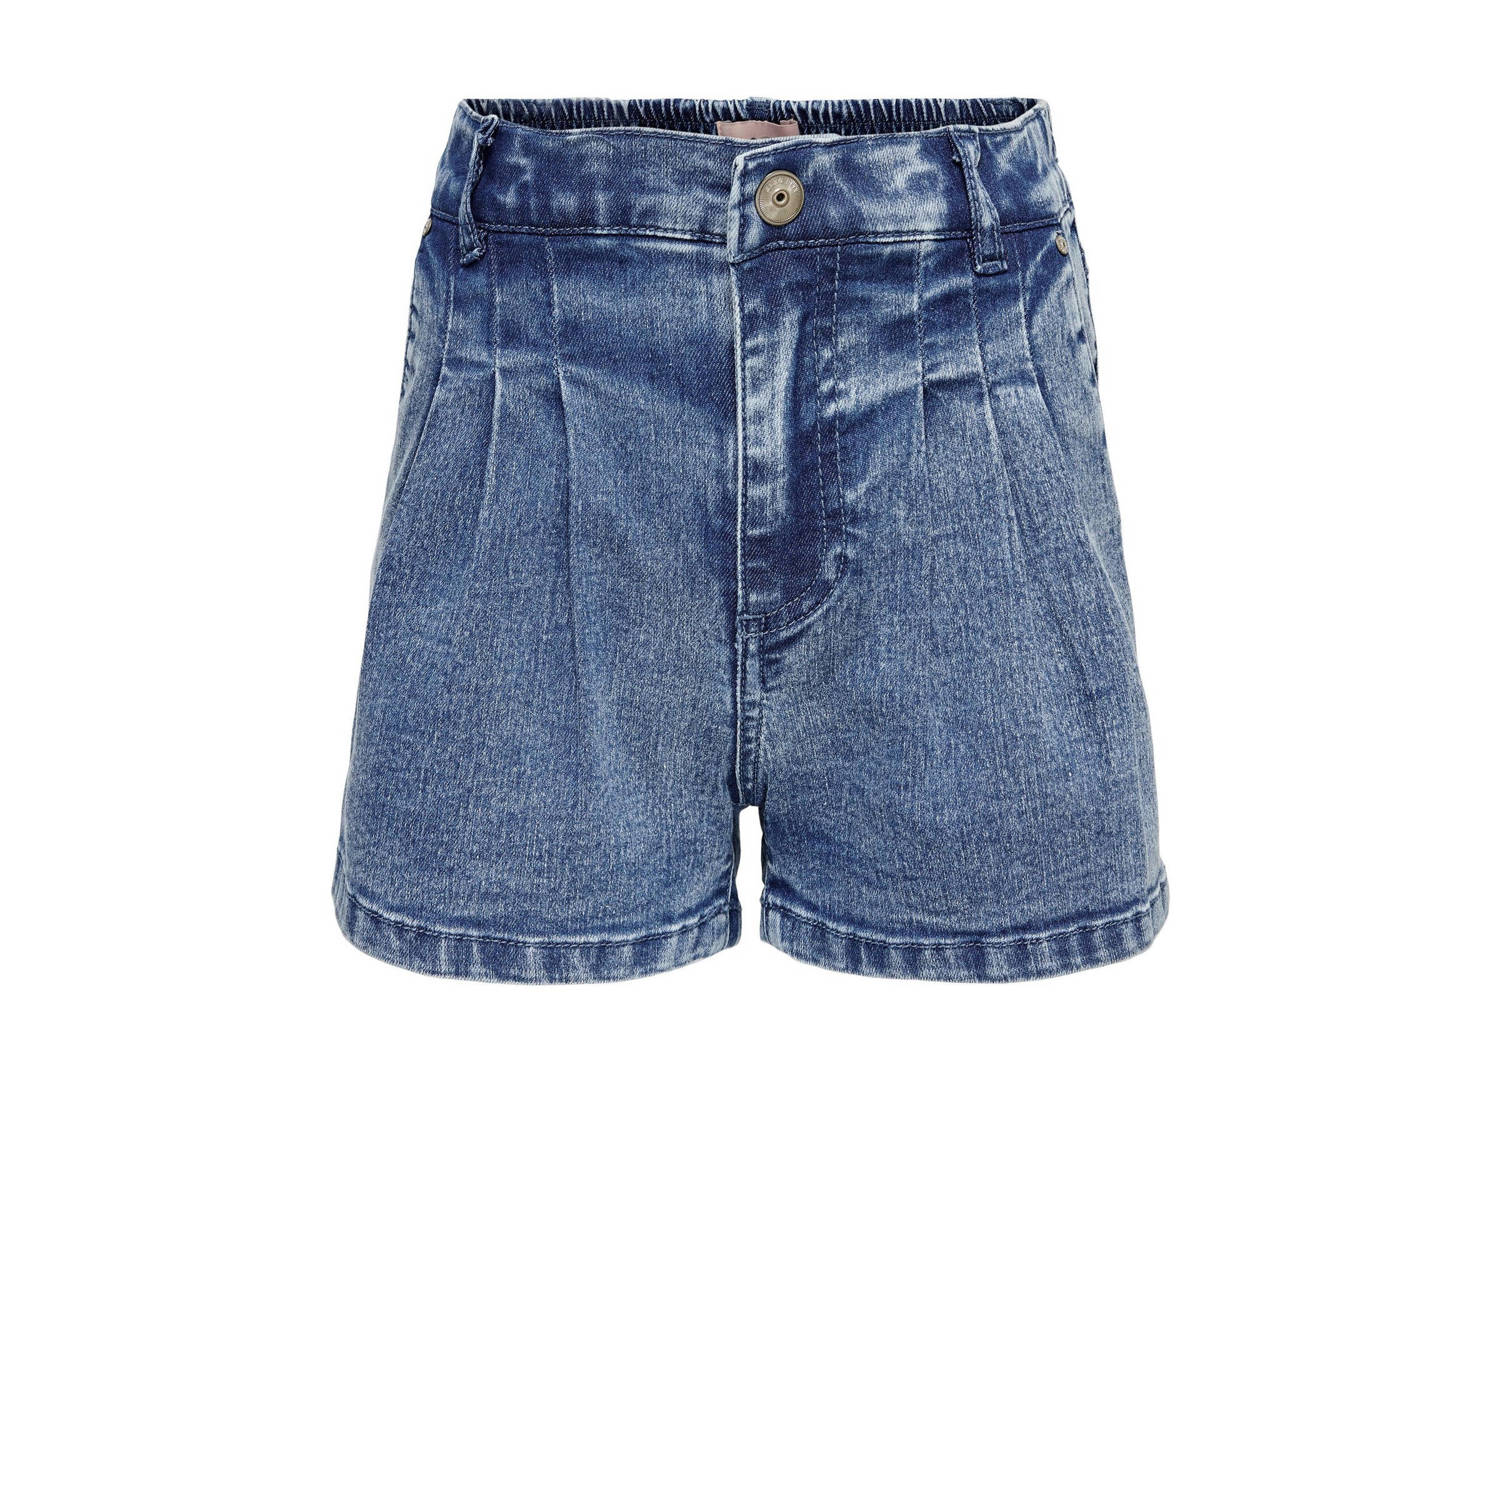 Only KIDS GIRL regular fit jeans short KOGSAINT medium blue denim short Blauw Meisjes Stretchdenim 128